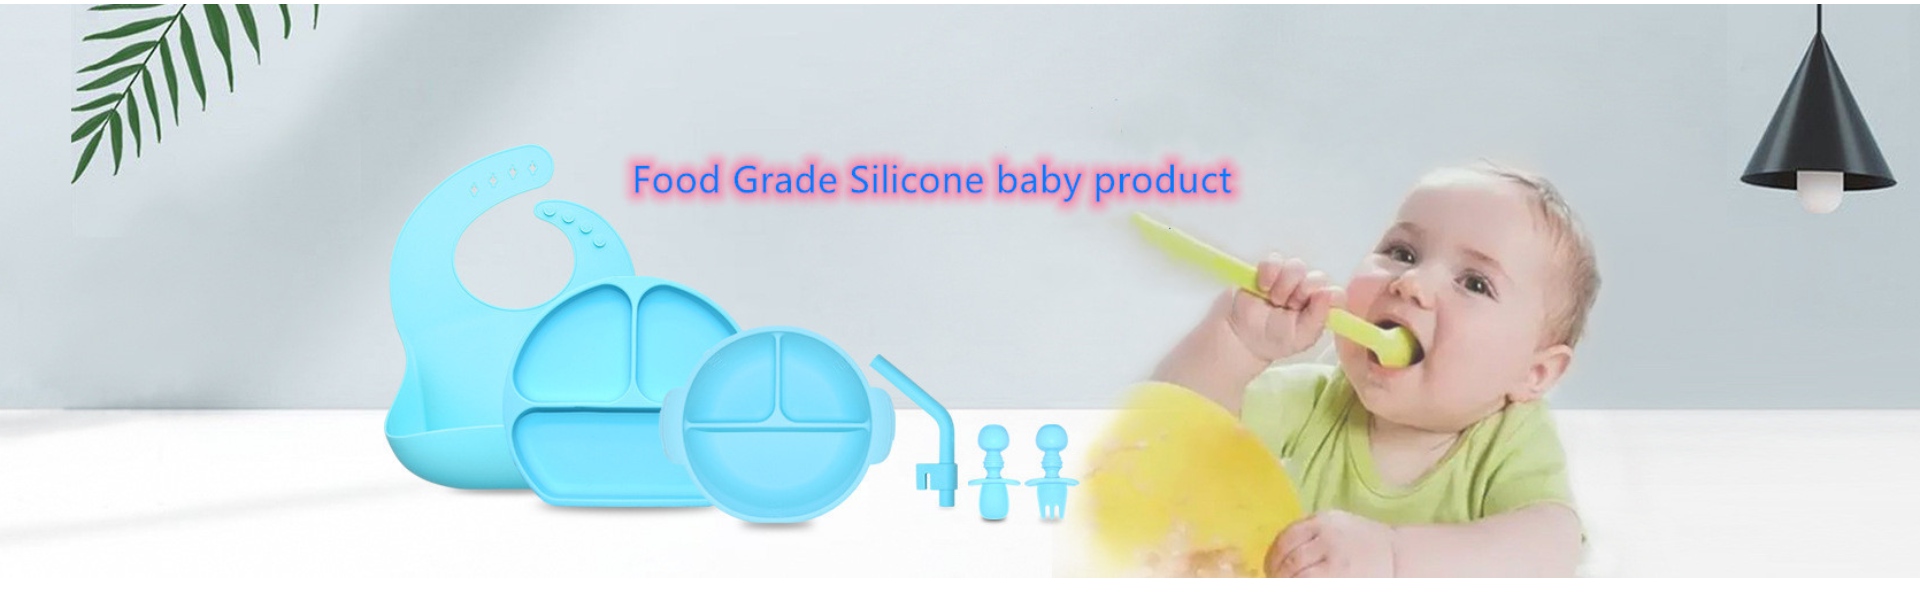 Silikonküchenwaren, Silikoneisform, Silikonbabyprodukt,Huizhou Calipolo accessory Ltd